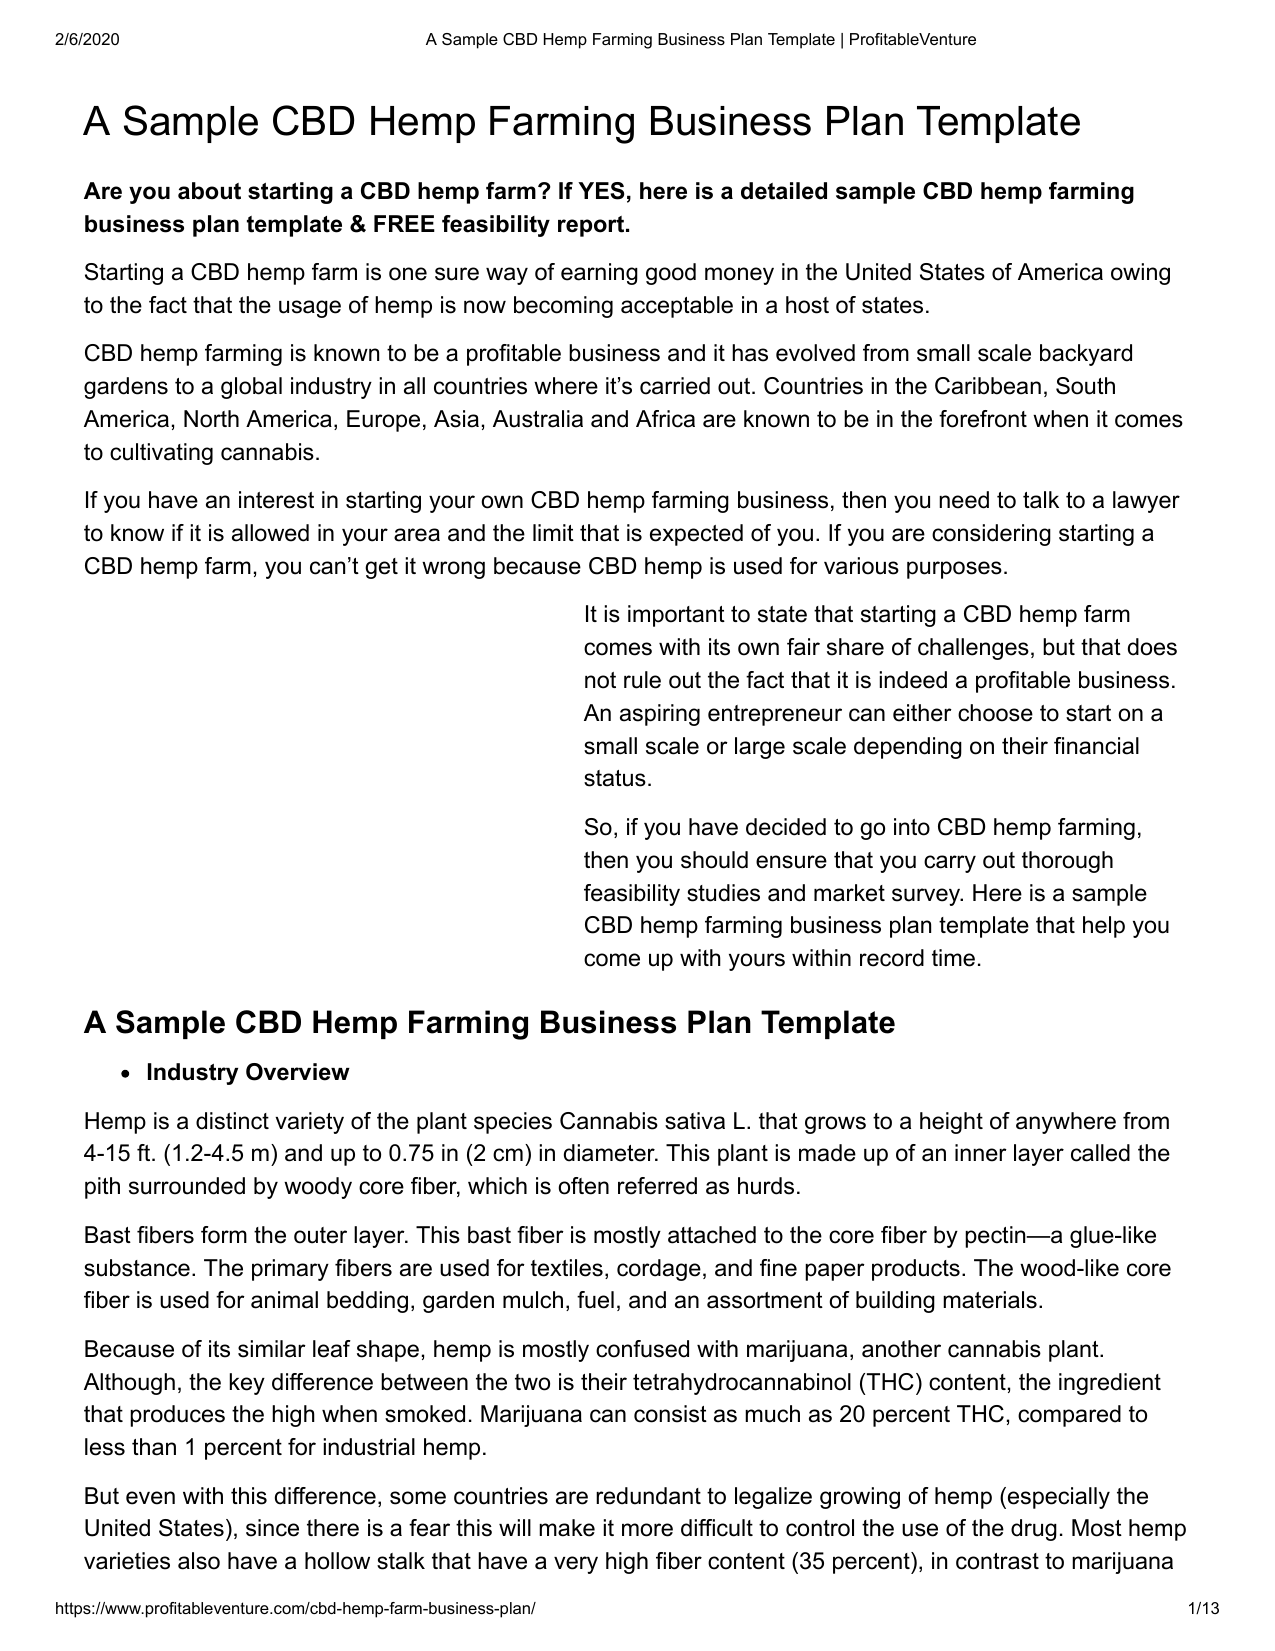 A Sample CBD Hemp Farming Business Plan Template Pertaining To Livestock Business Plan Template